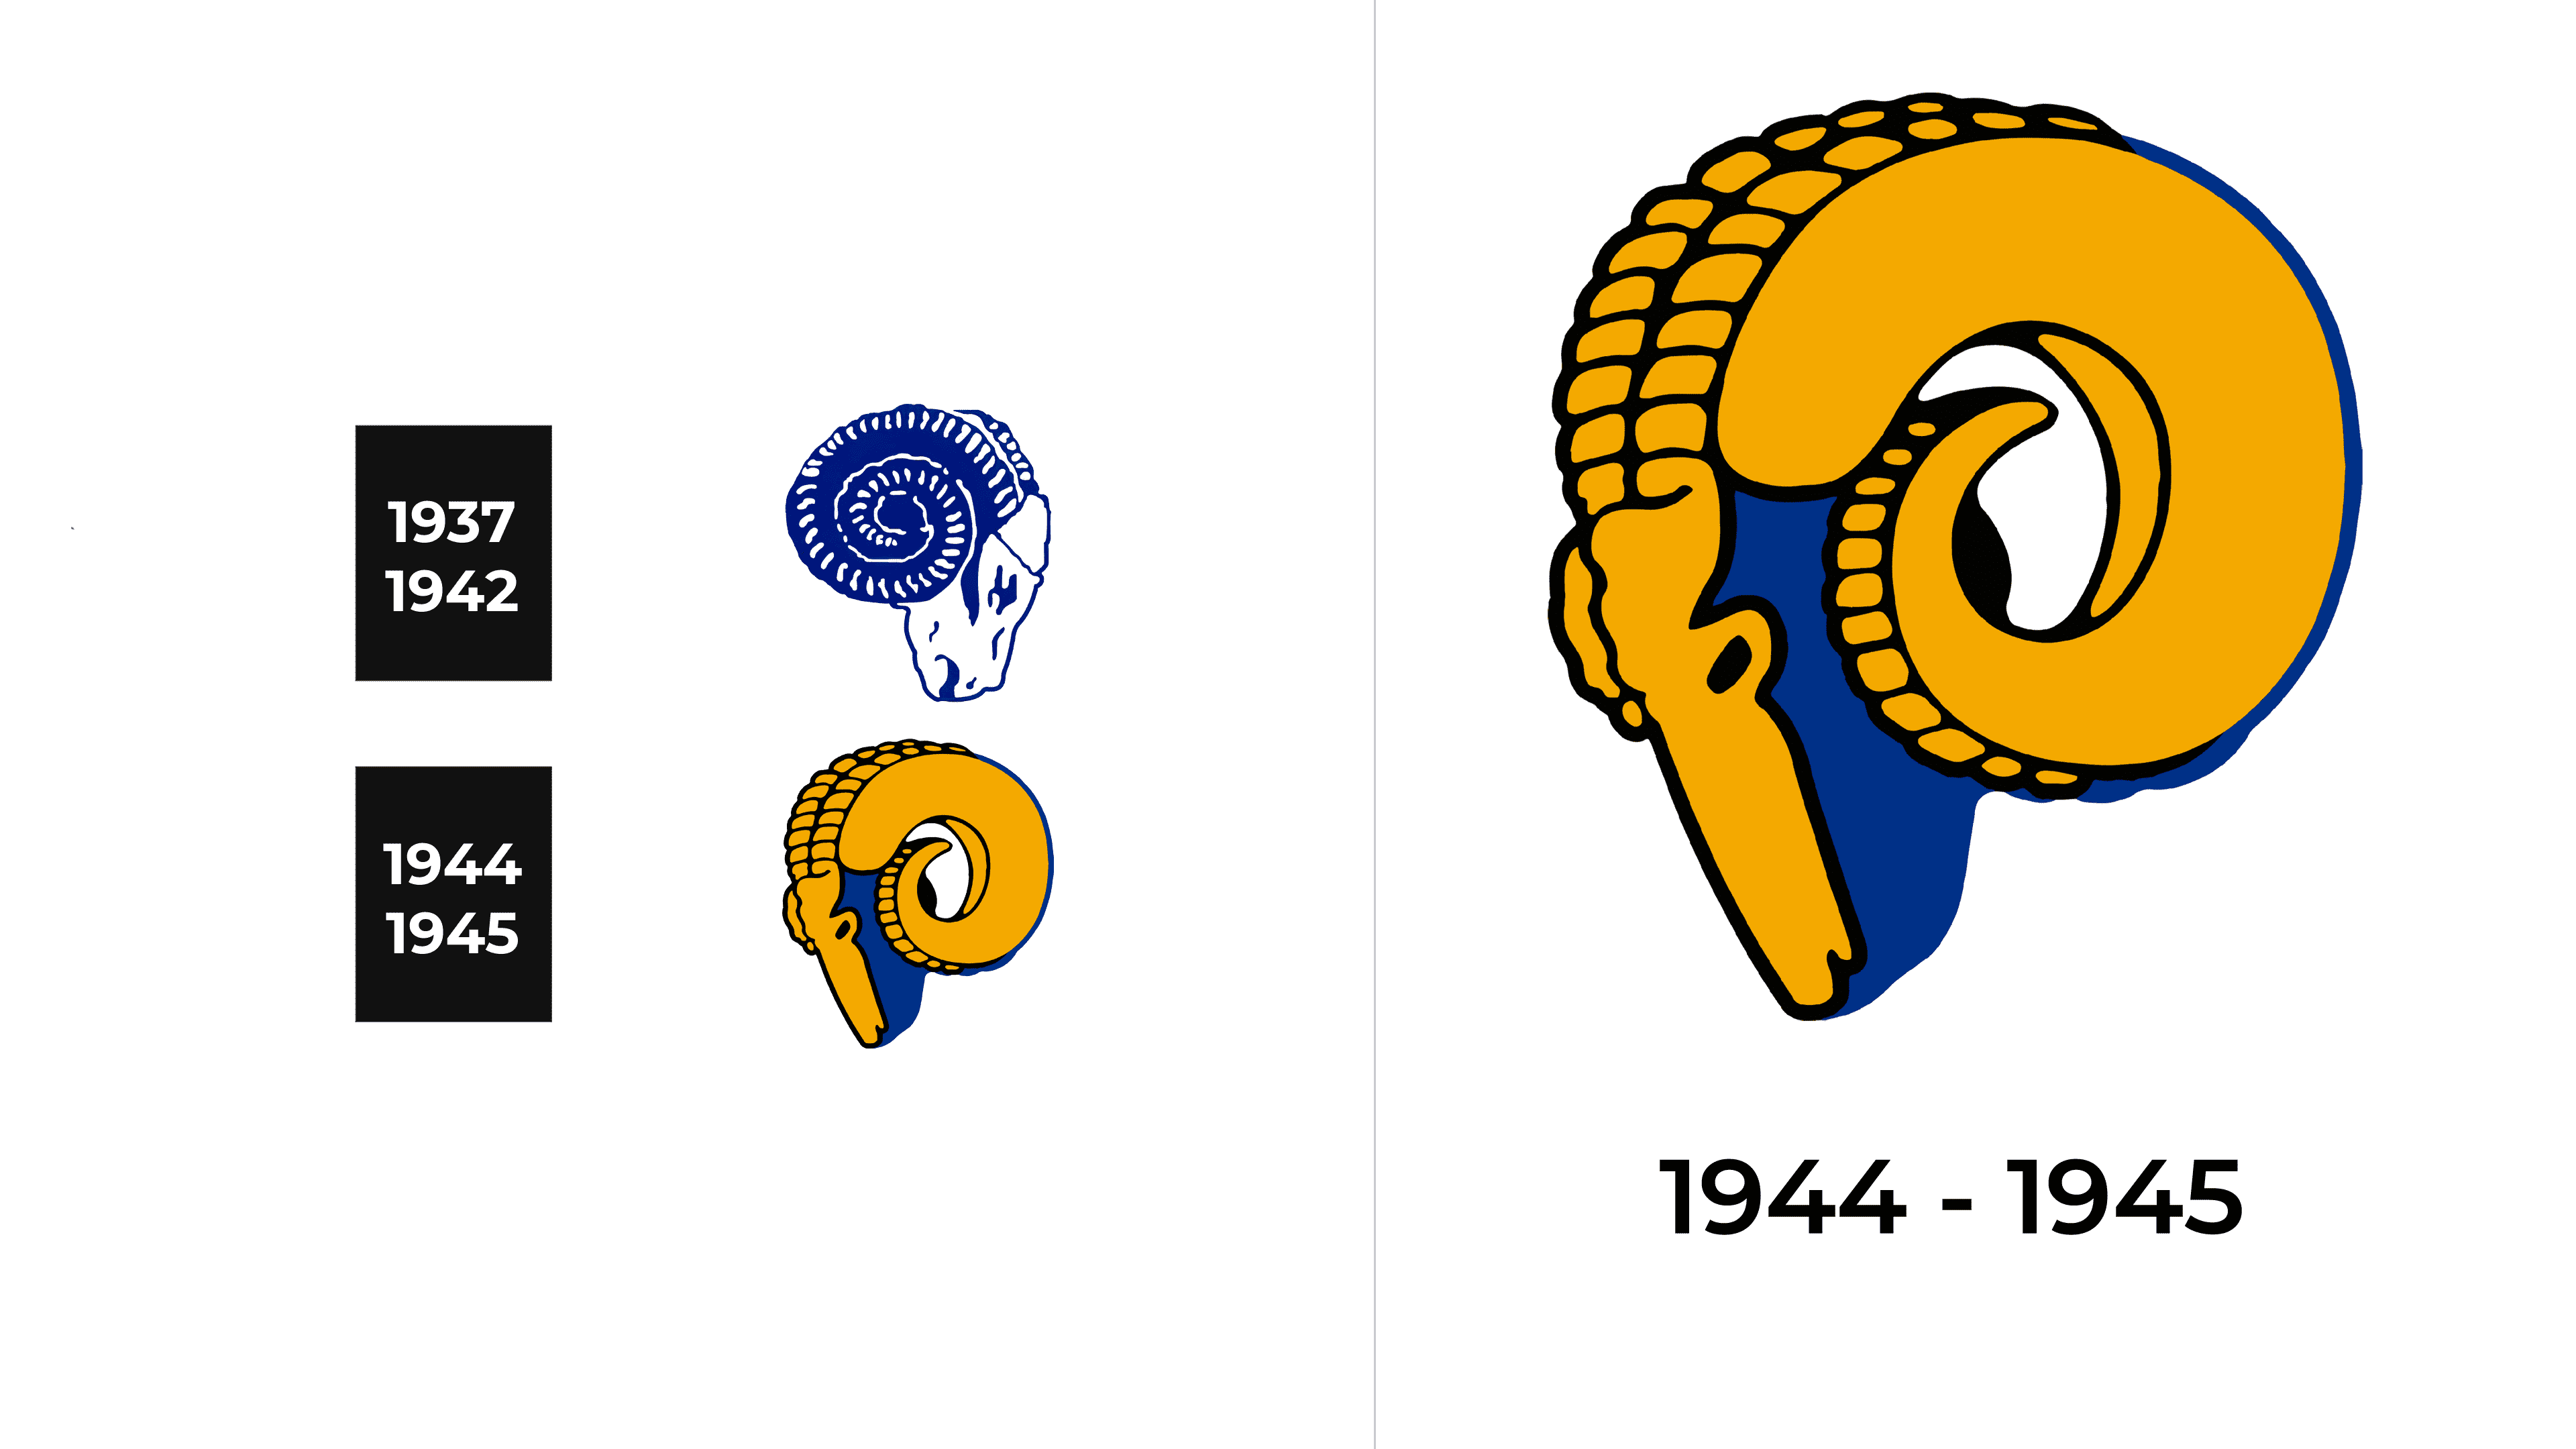 Cleveland Rams 1940 uniform artwork